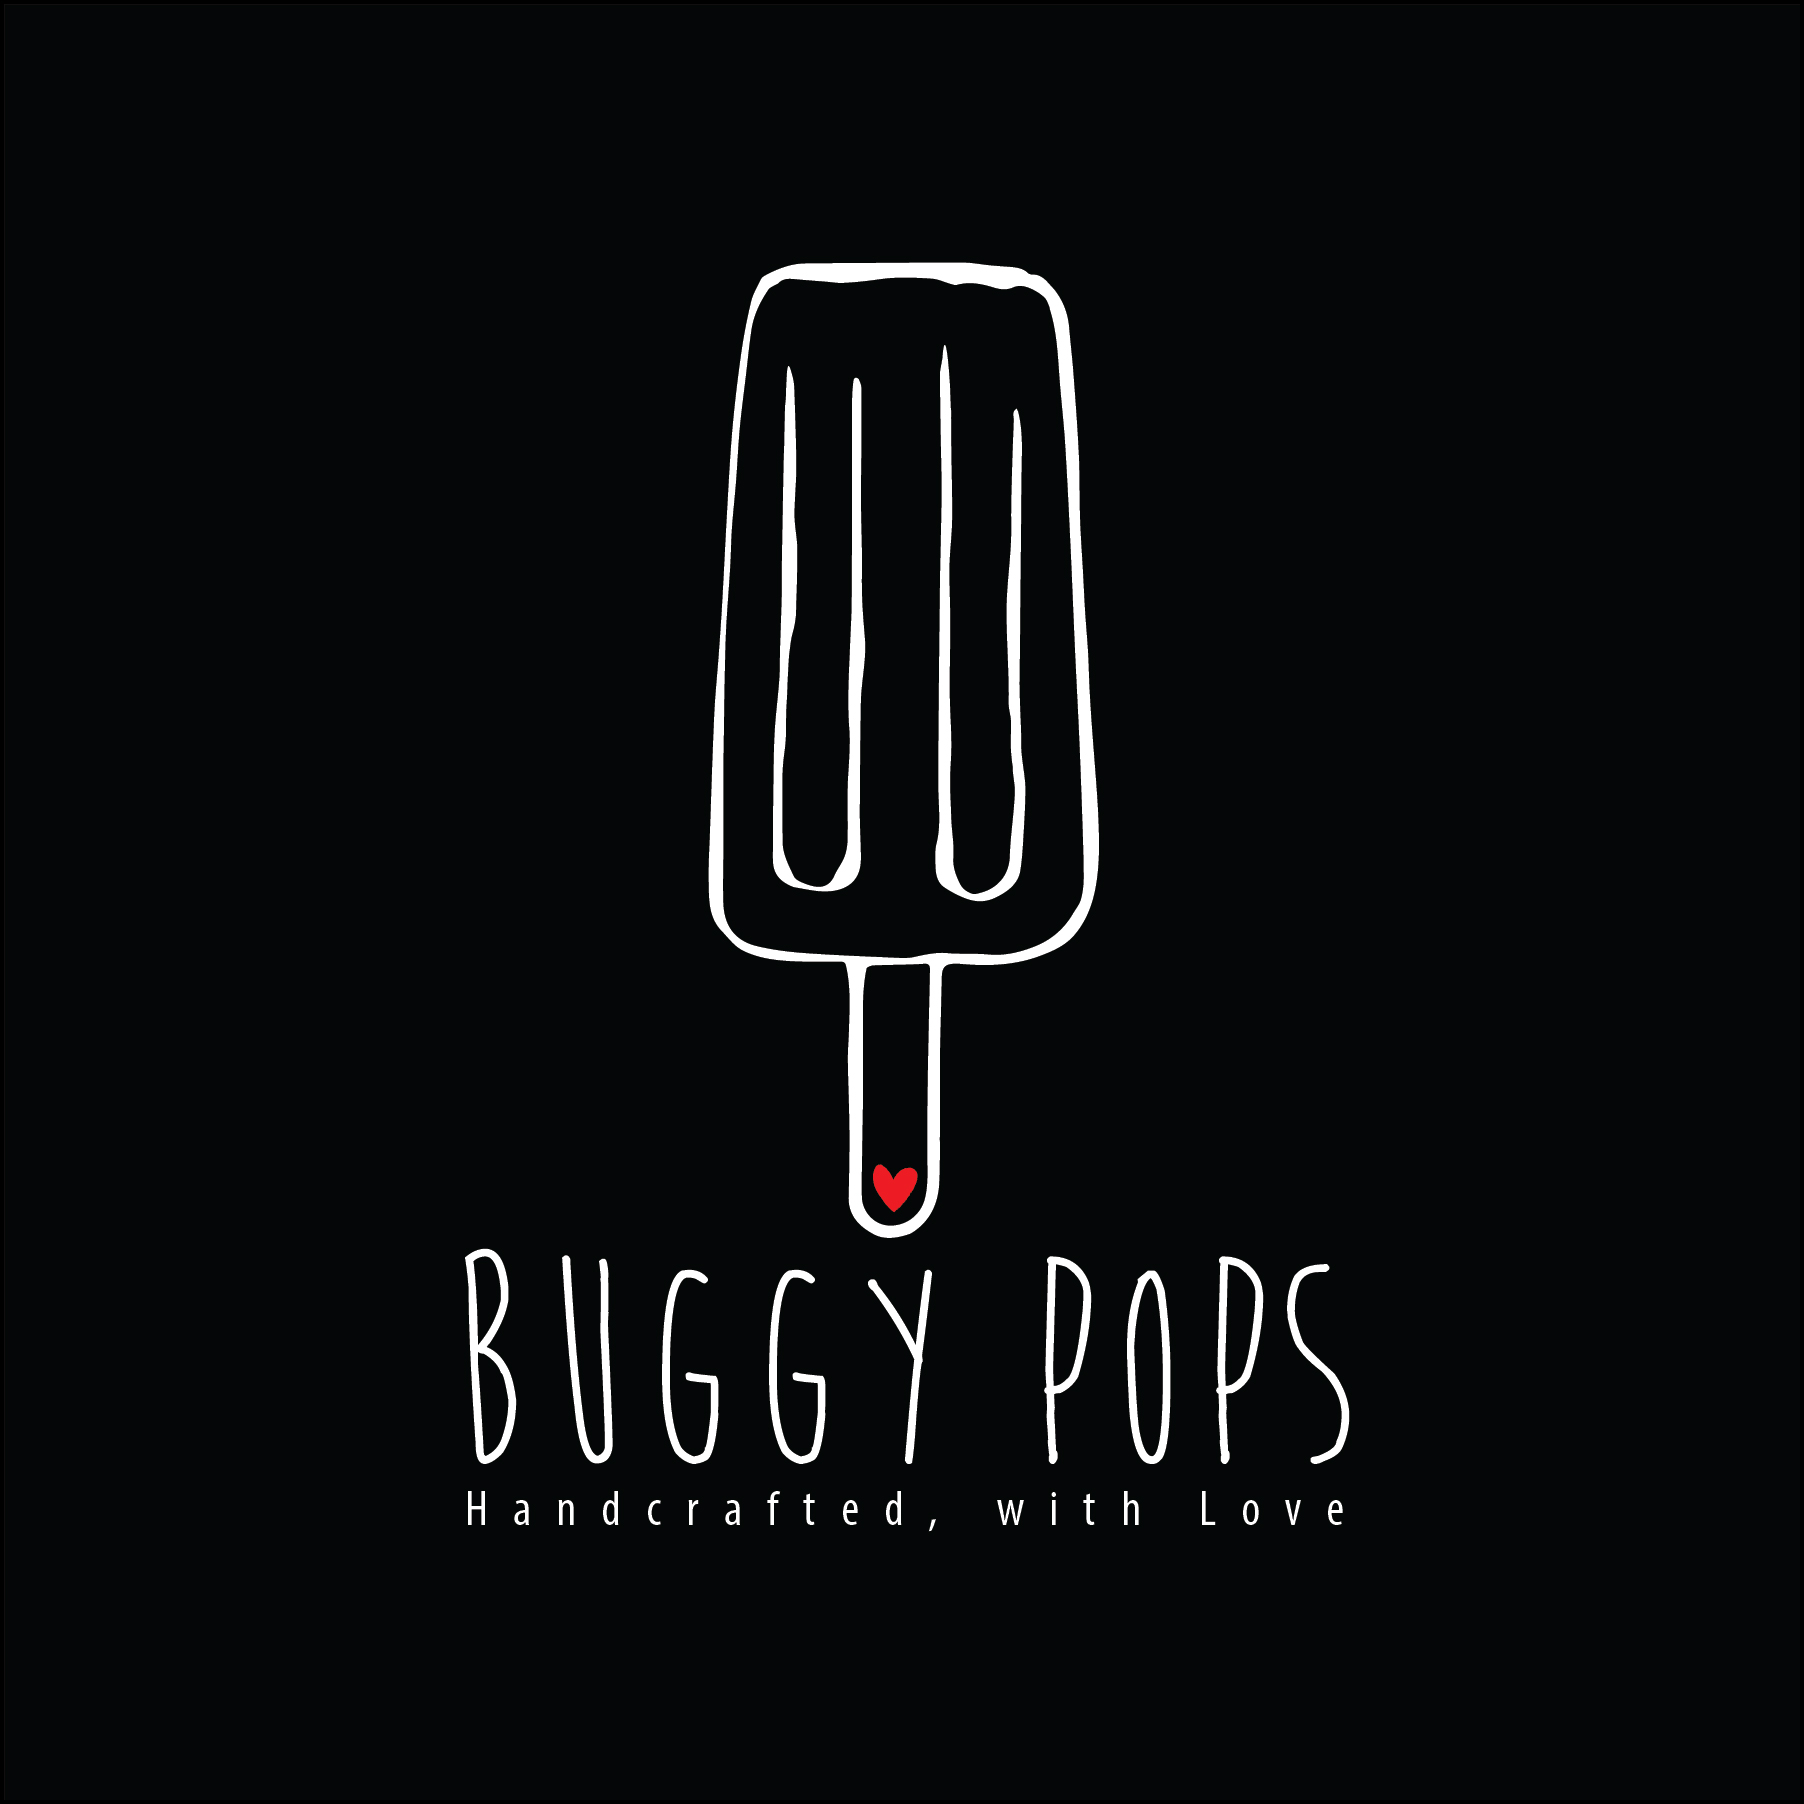 Buggy Pops